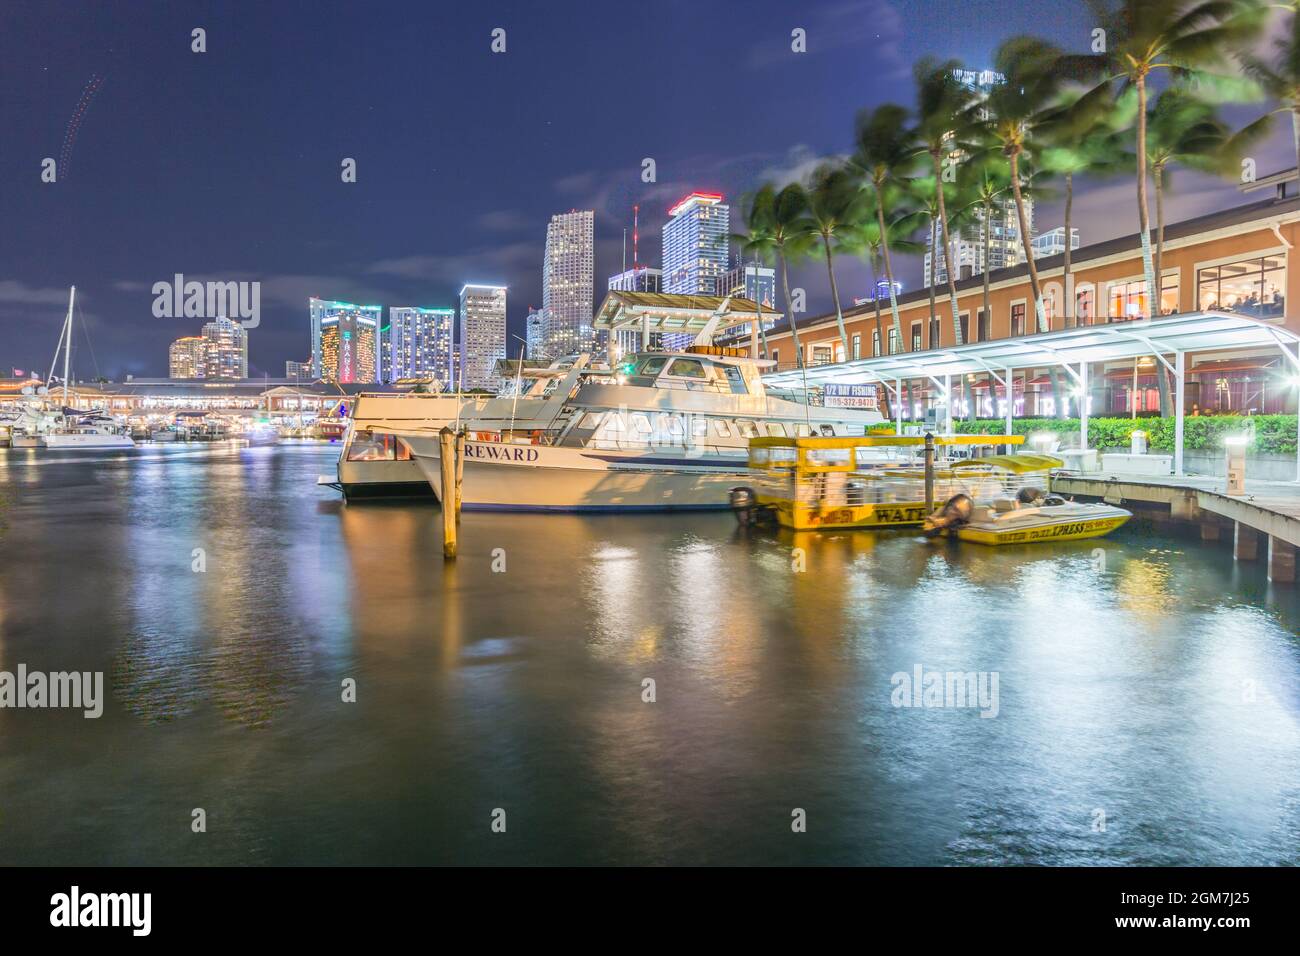 MIAMI,FLORIDA/USA - DECEMBER 31, 2016: Bayside Marketplace at night on December 31, 2016 in Miami, Florida. It is a festival marketplace and the top e Stock Photo